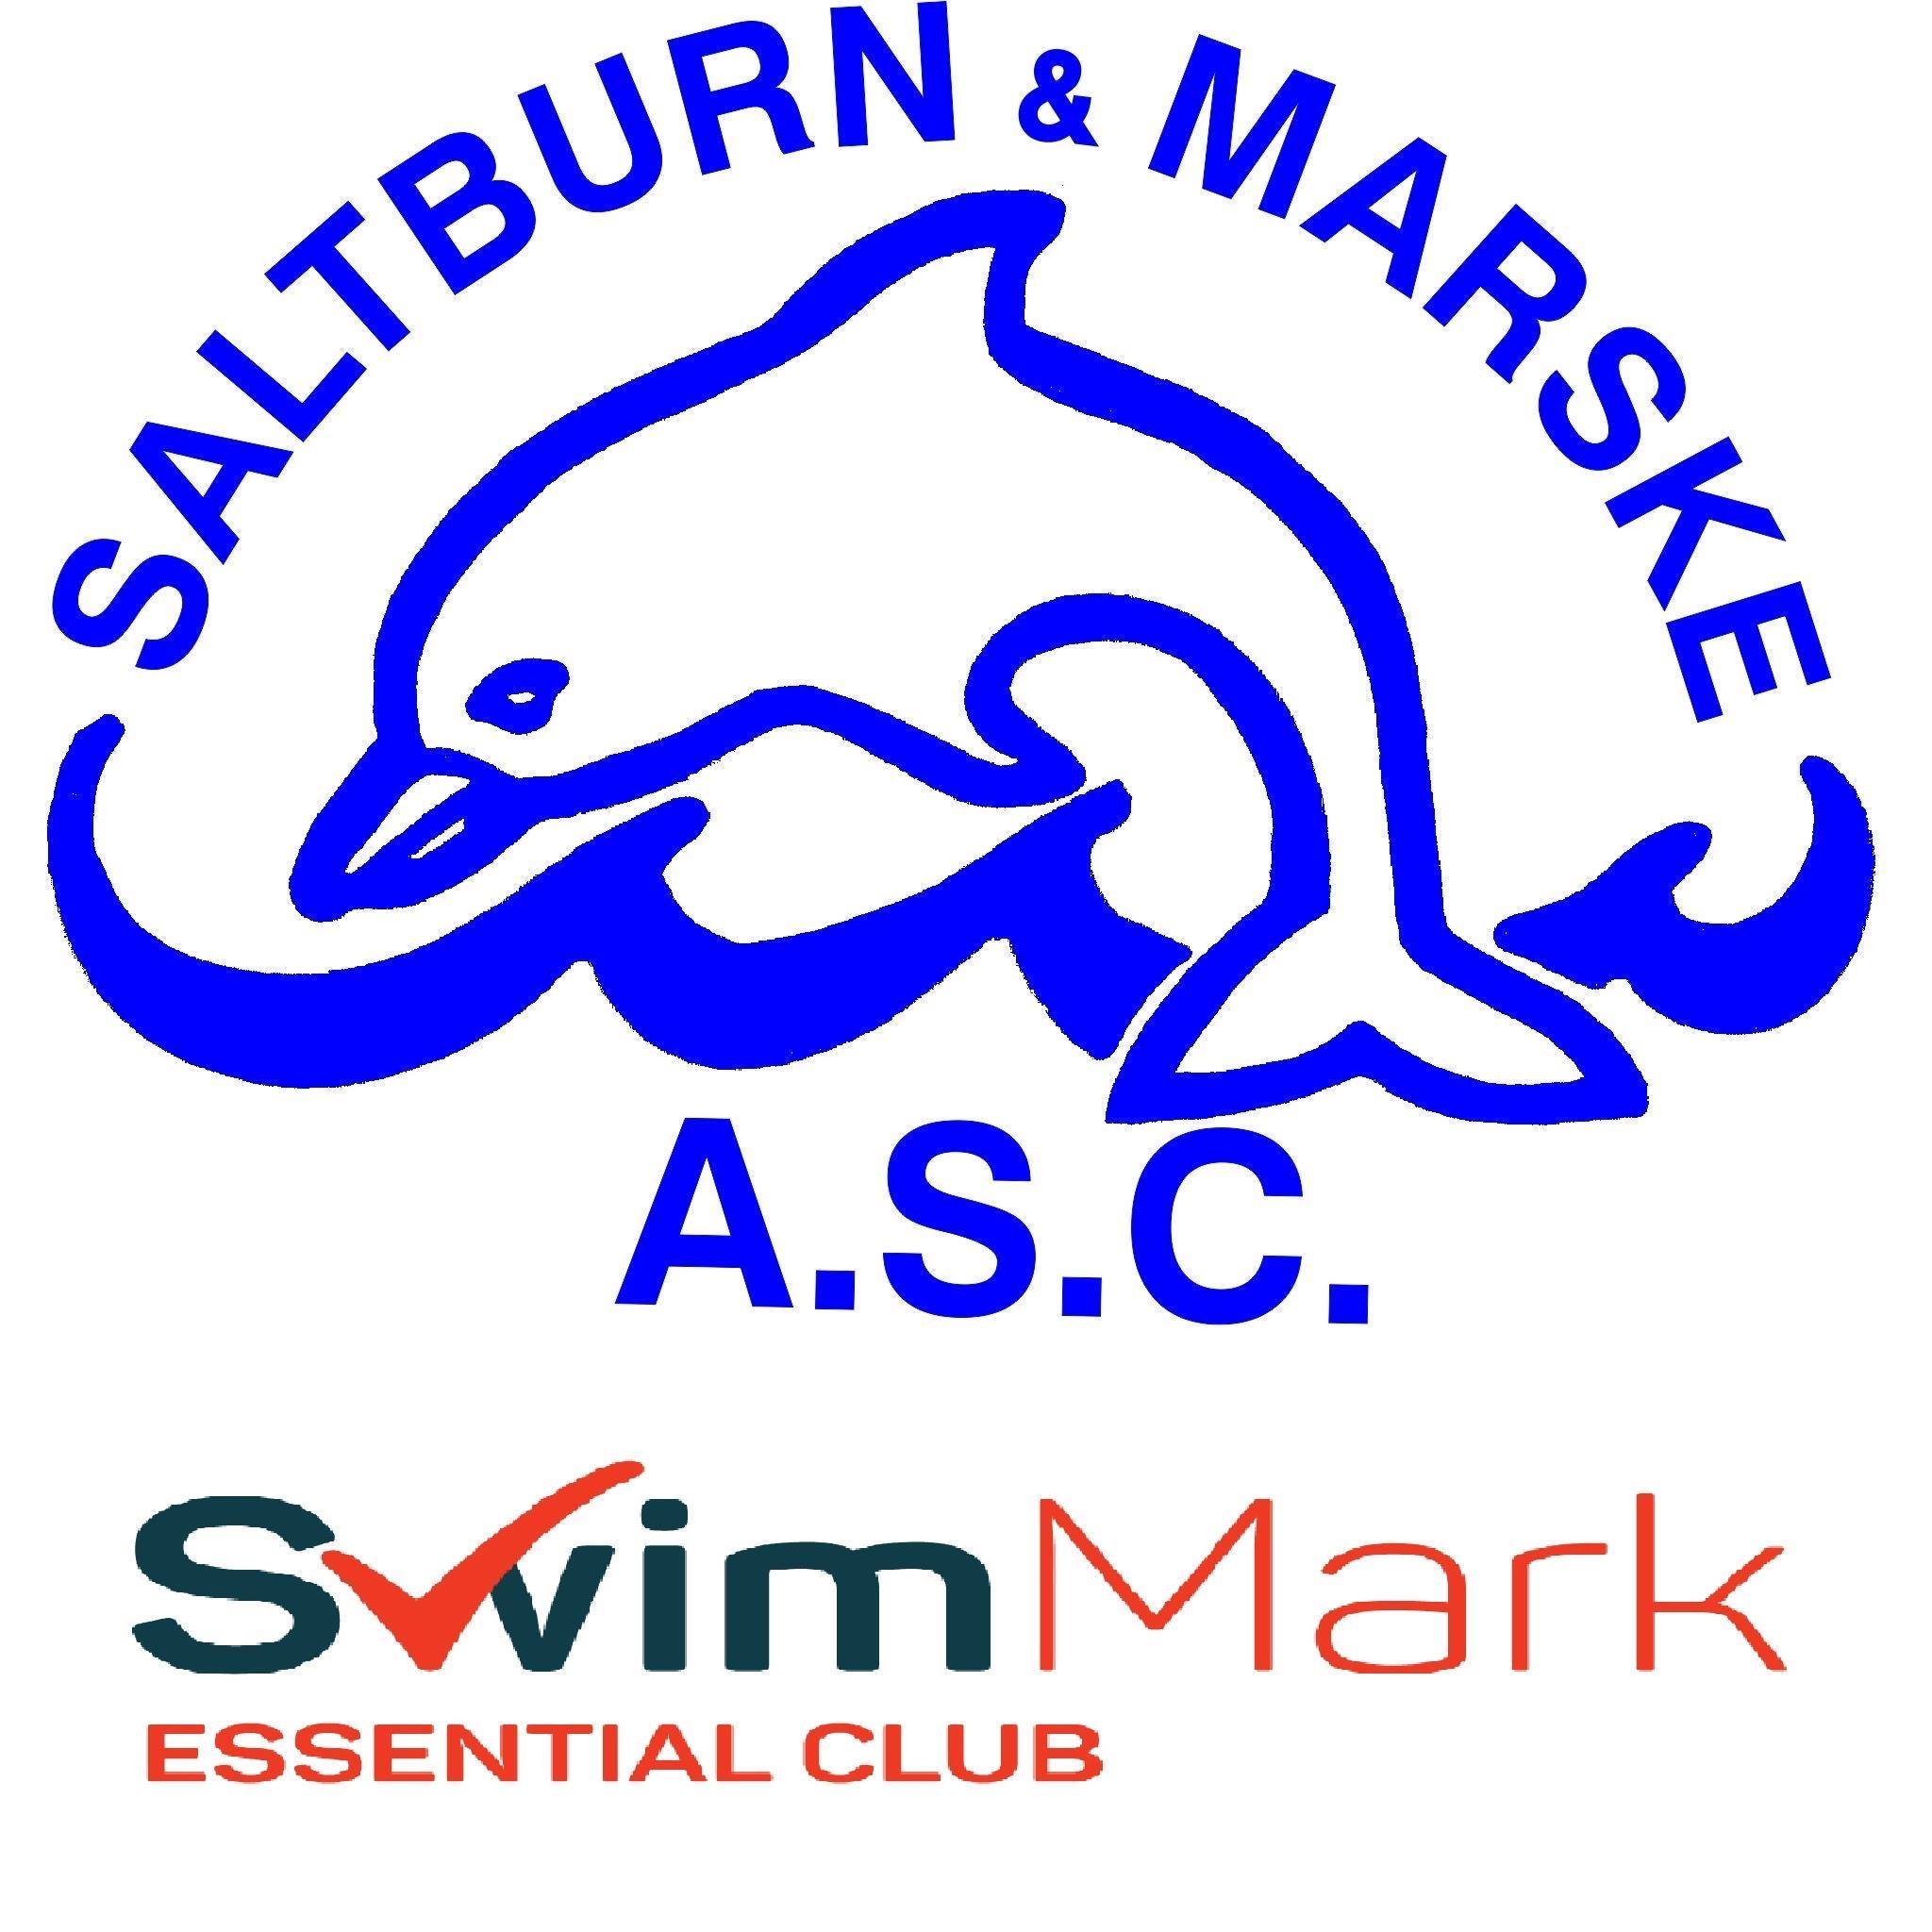 Saltburn Marske ASC (Amateur Swimming Club)